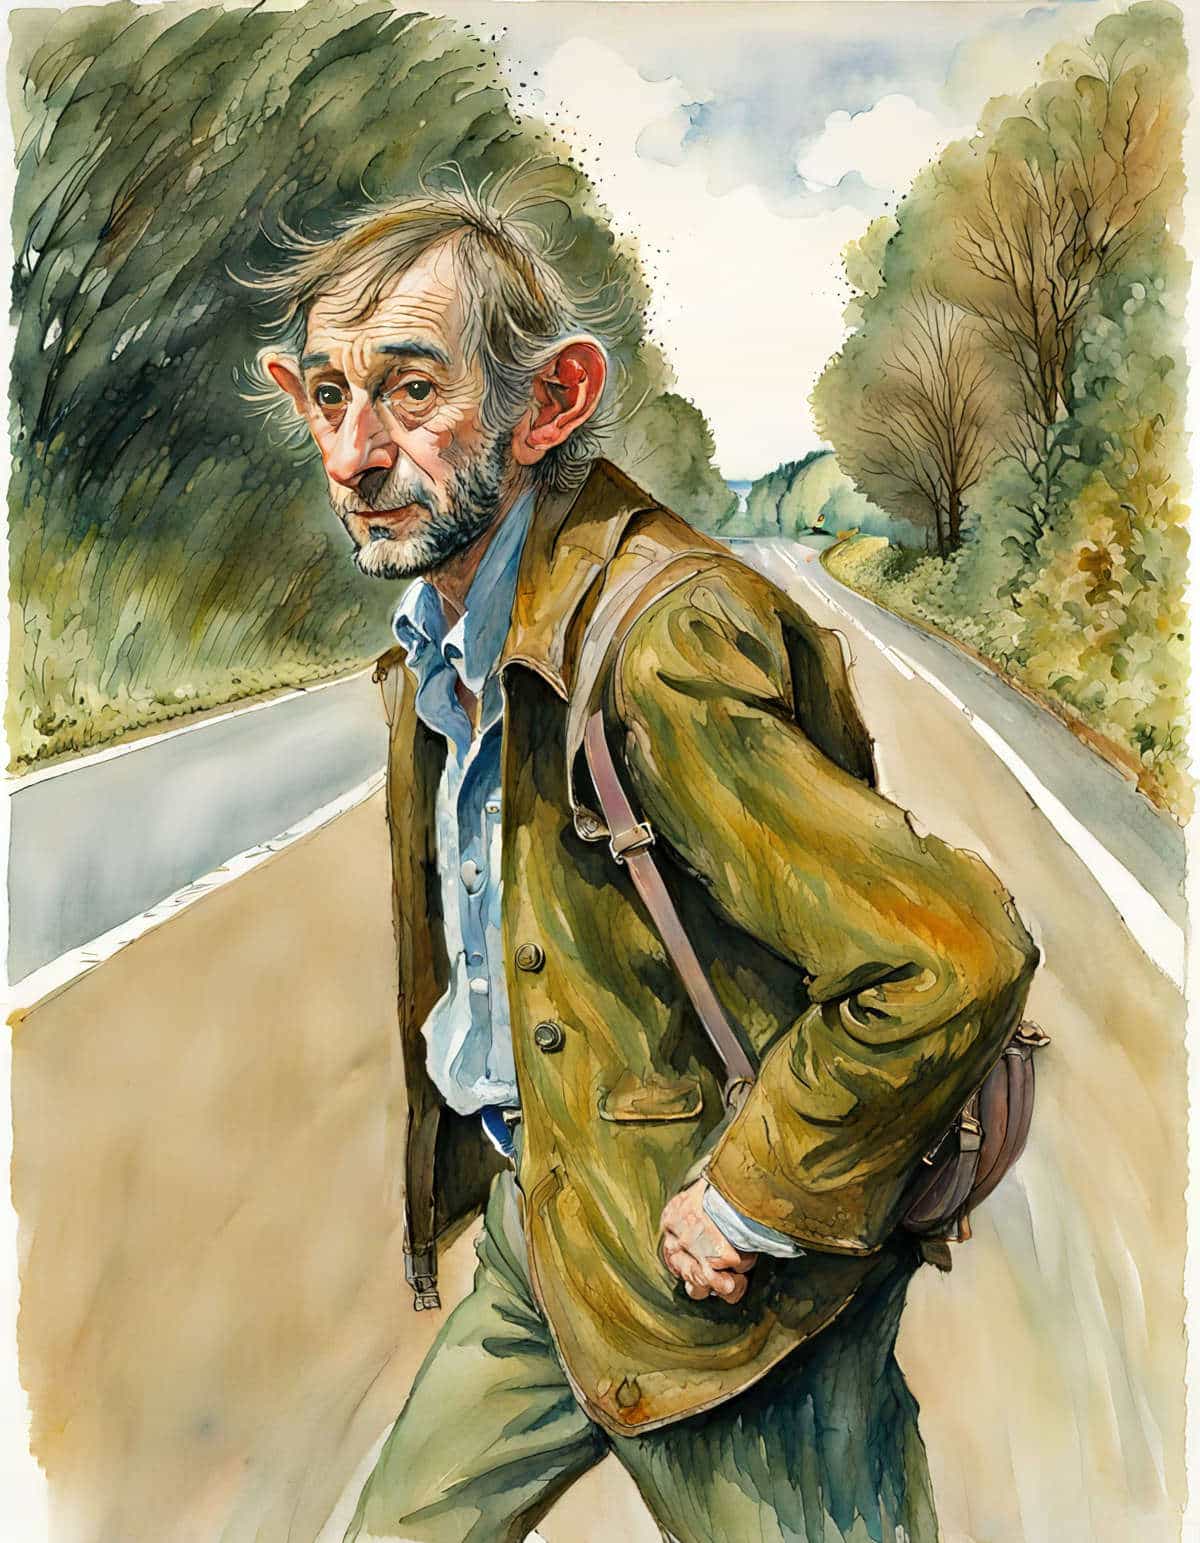 The Hitch-hiker by Roald Dahl